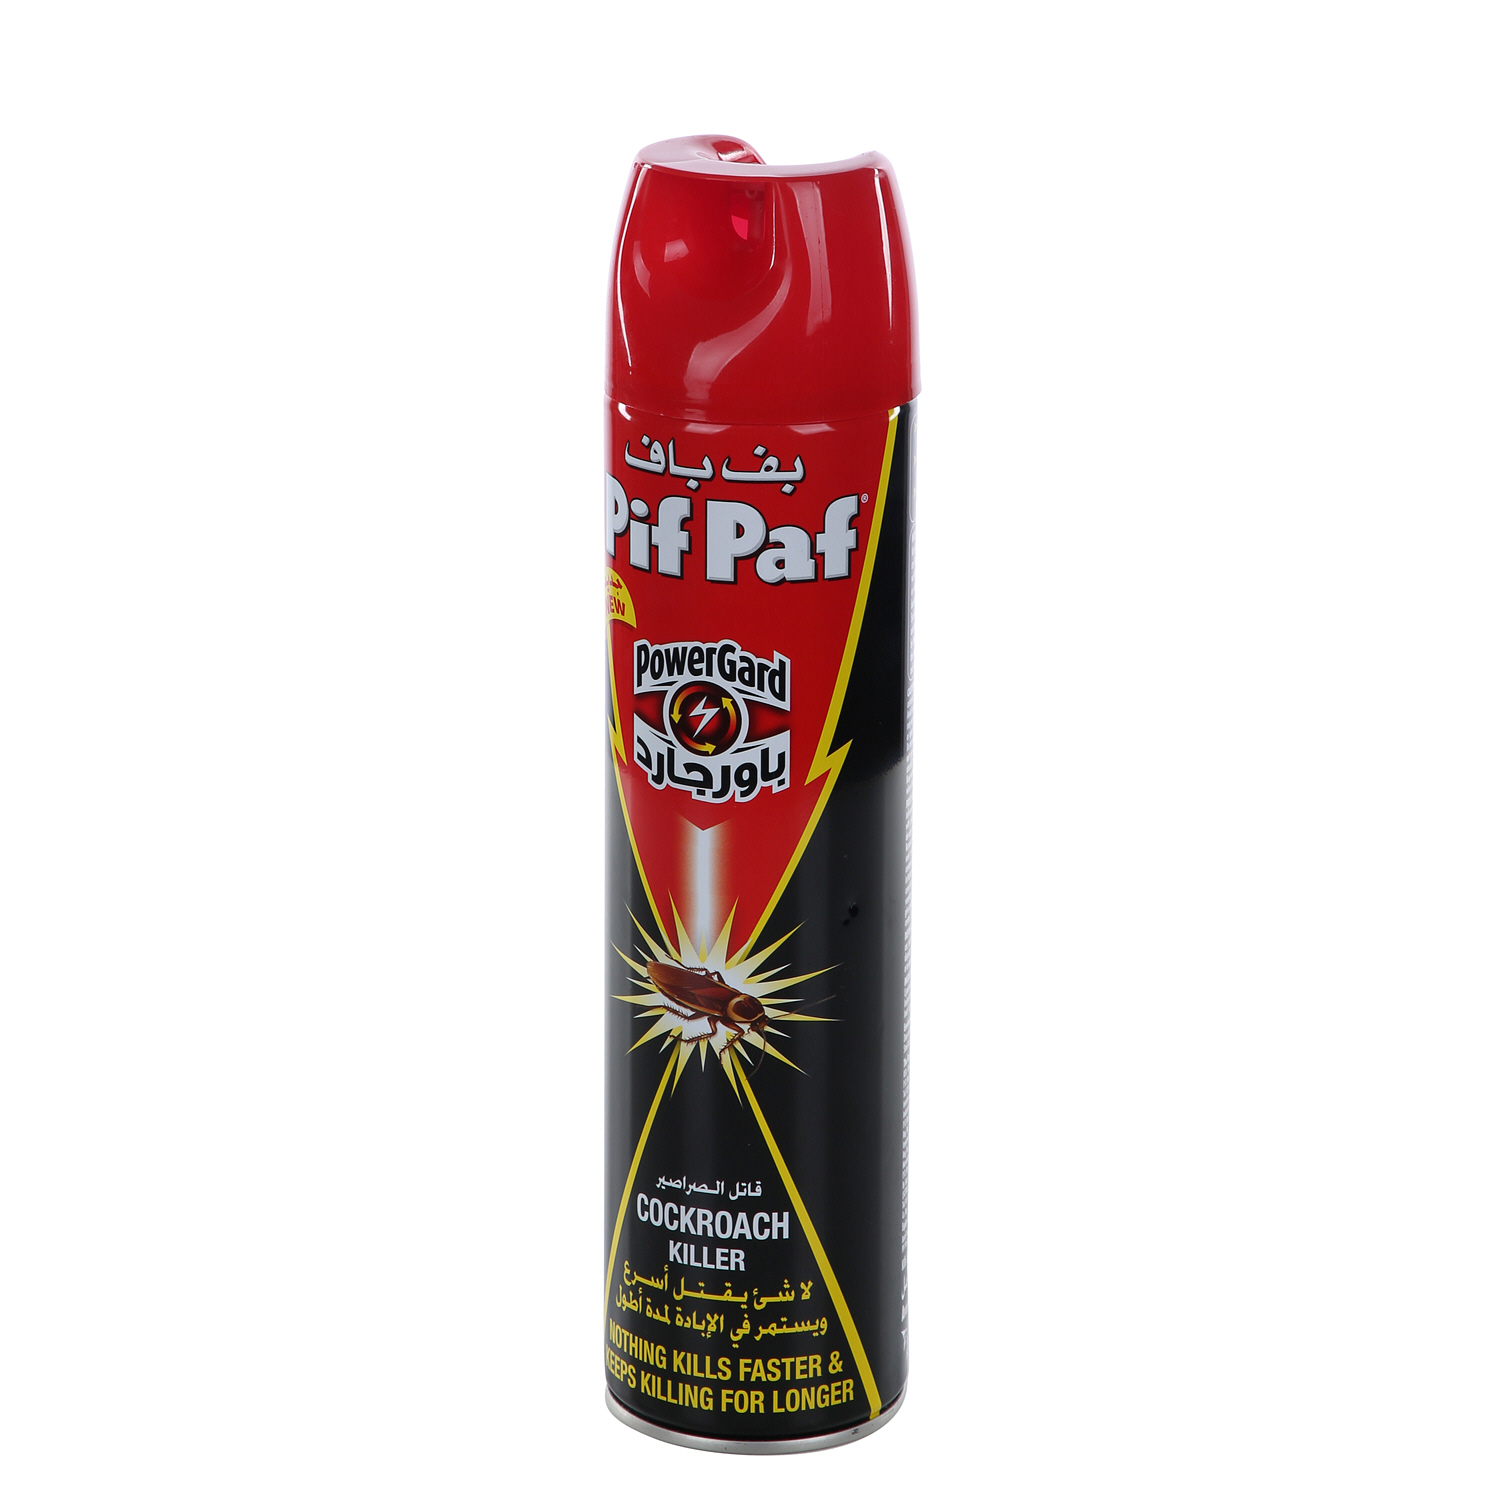 Pif Paf Powergard Cockroach Killer 600 ml